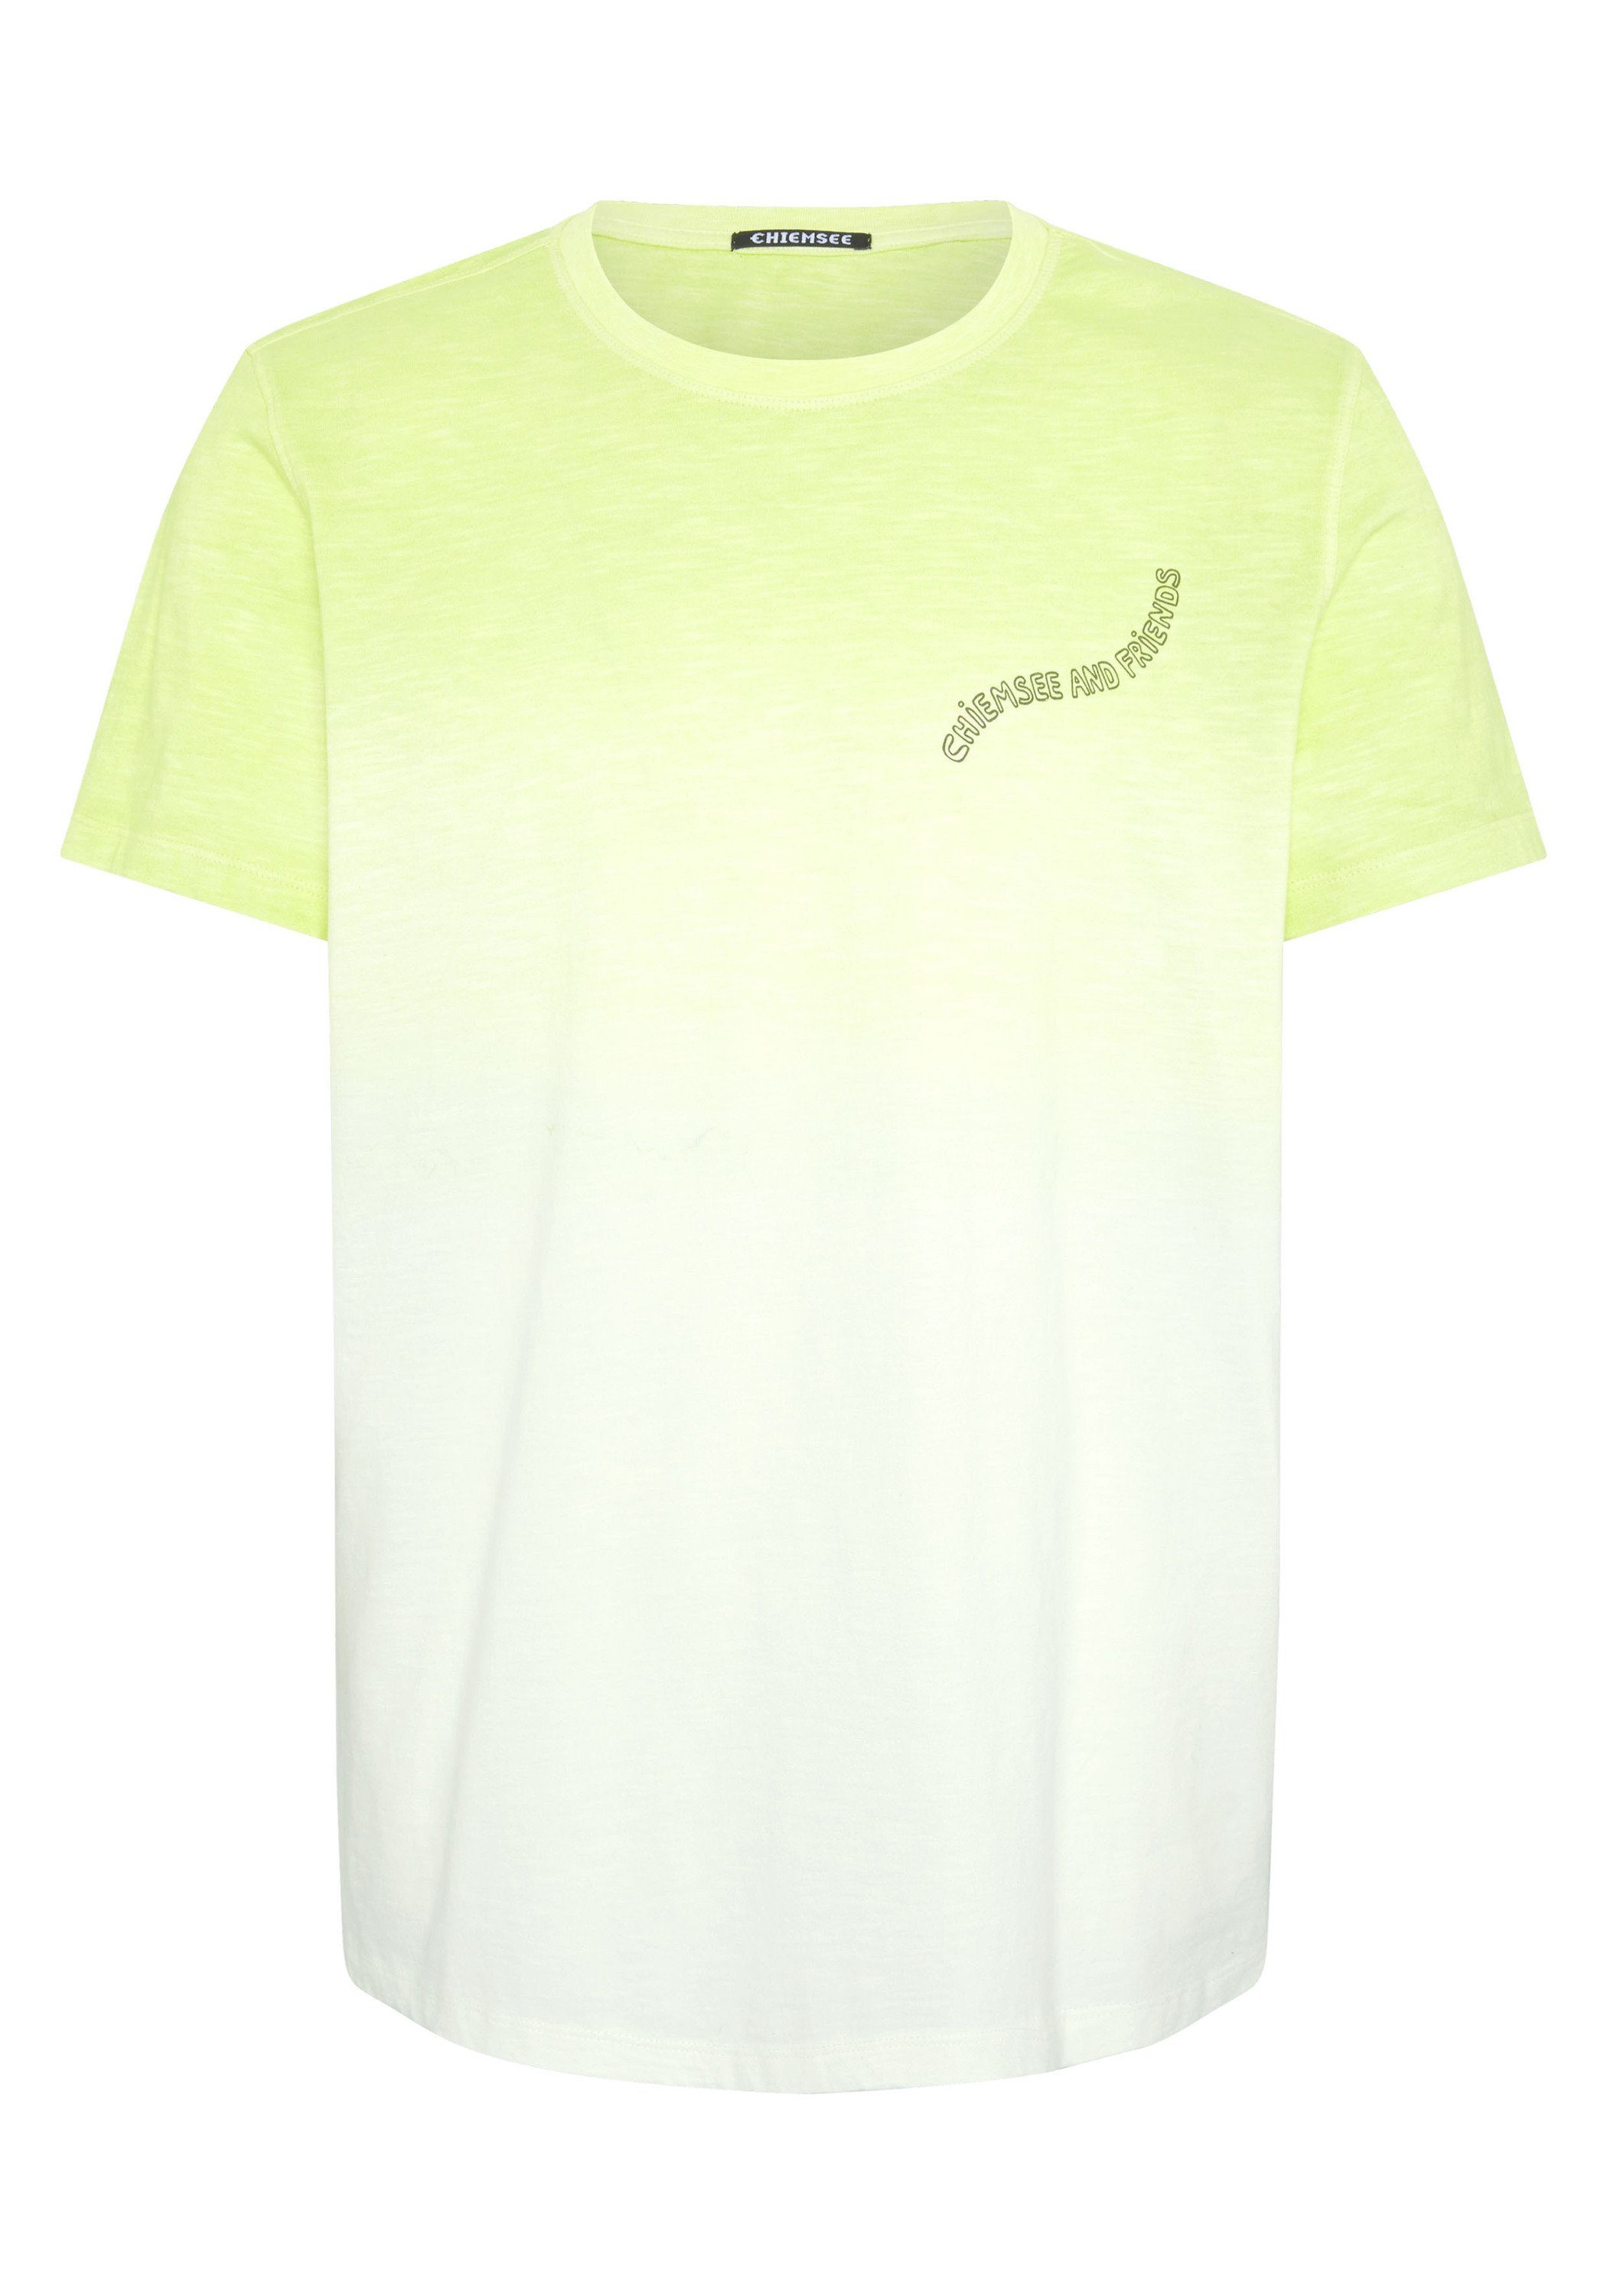 im Light Print-Shirt 1 6268 Green/Dark T-Shirt Farbverlauf Green mit Slub-Yarn-Textur Chiemsee